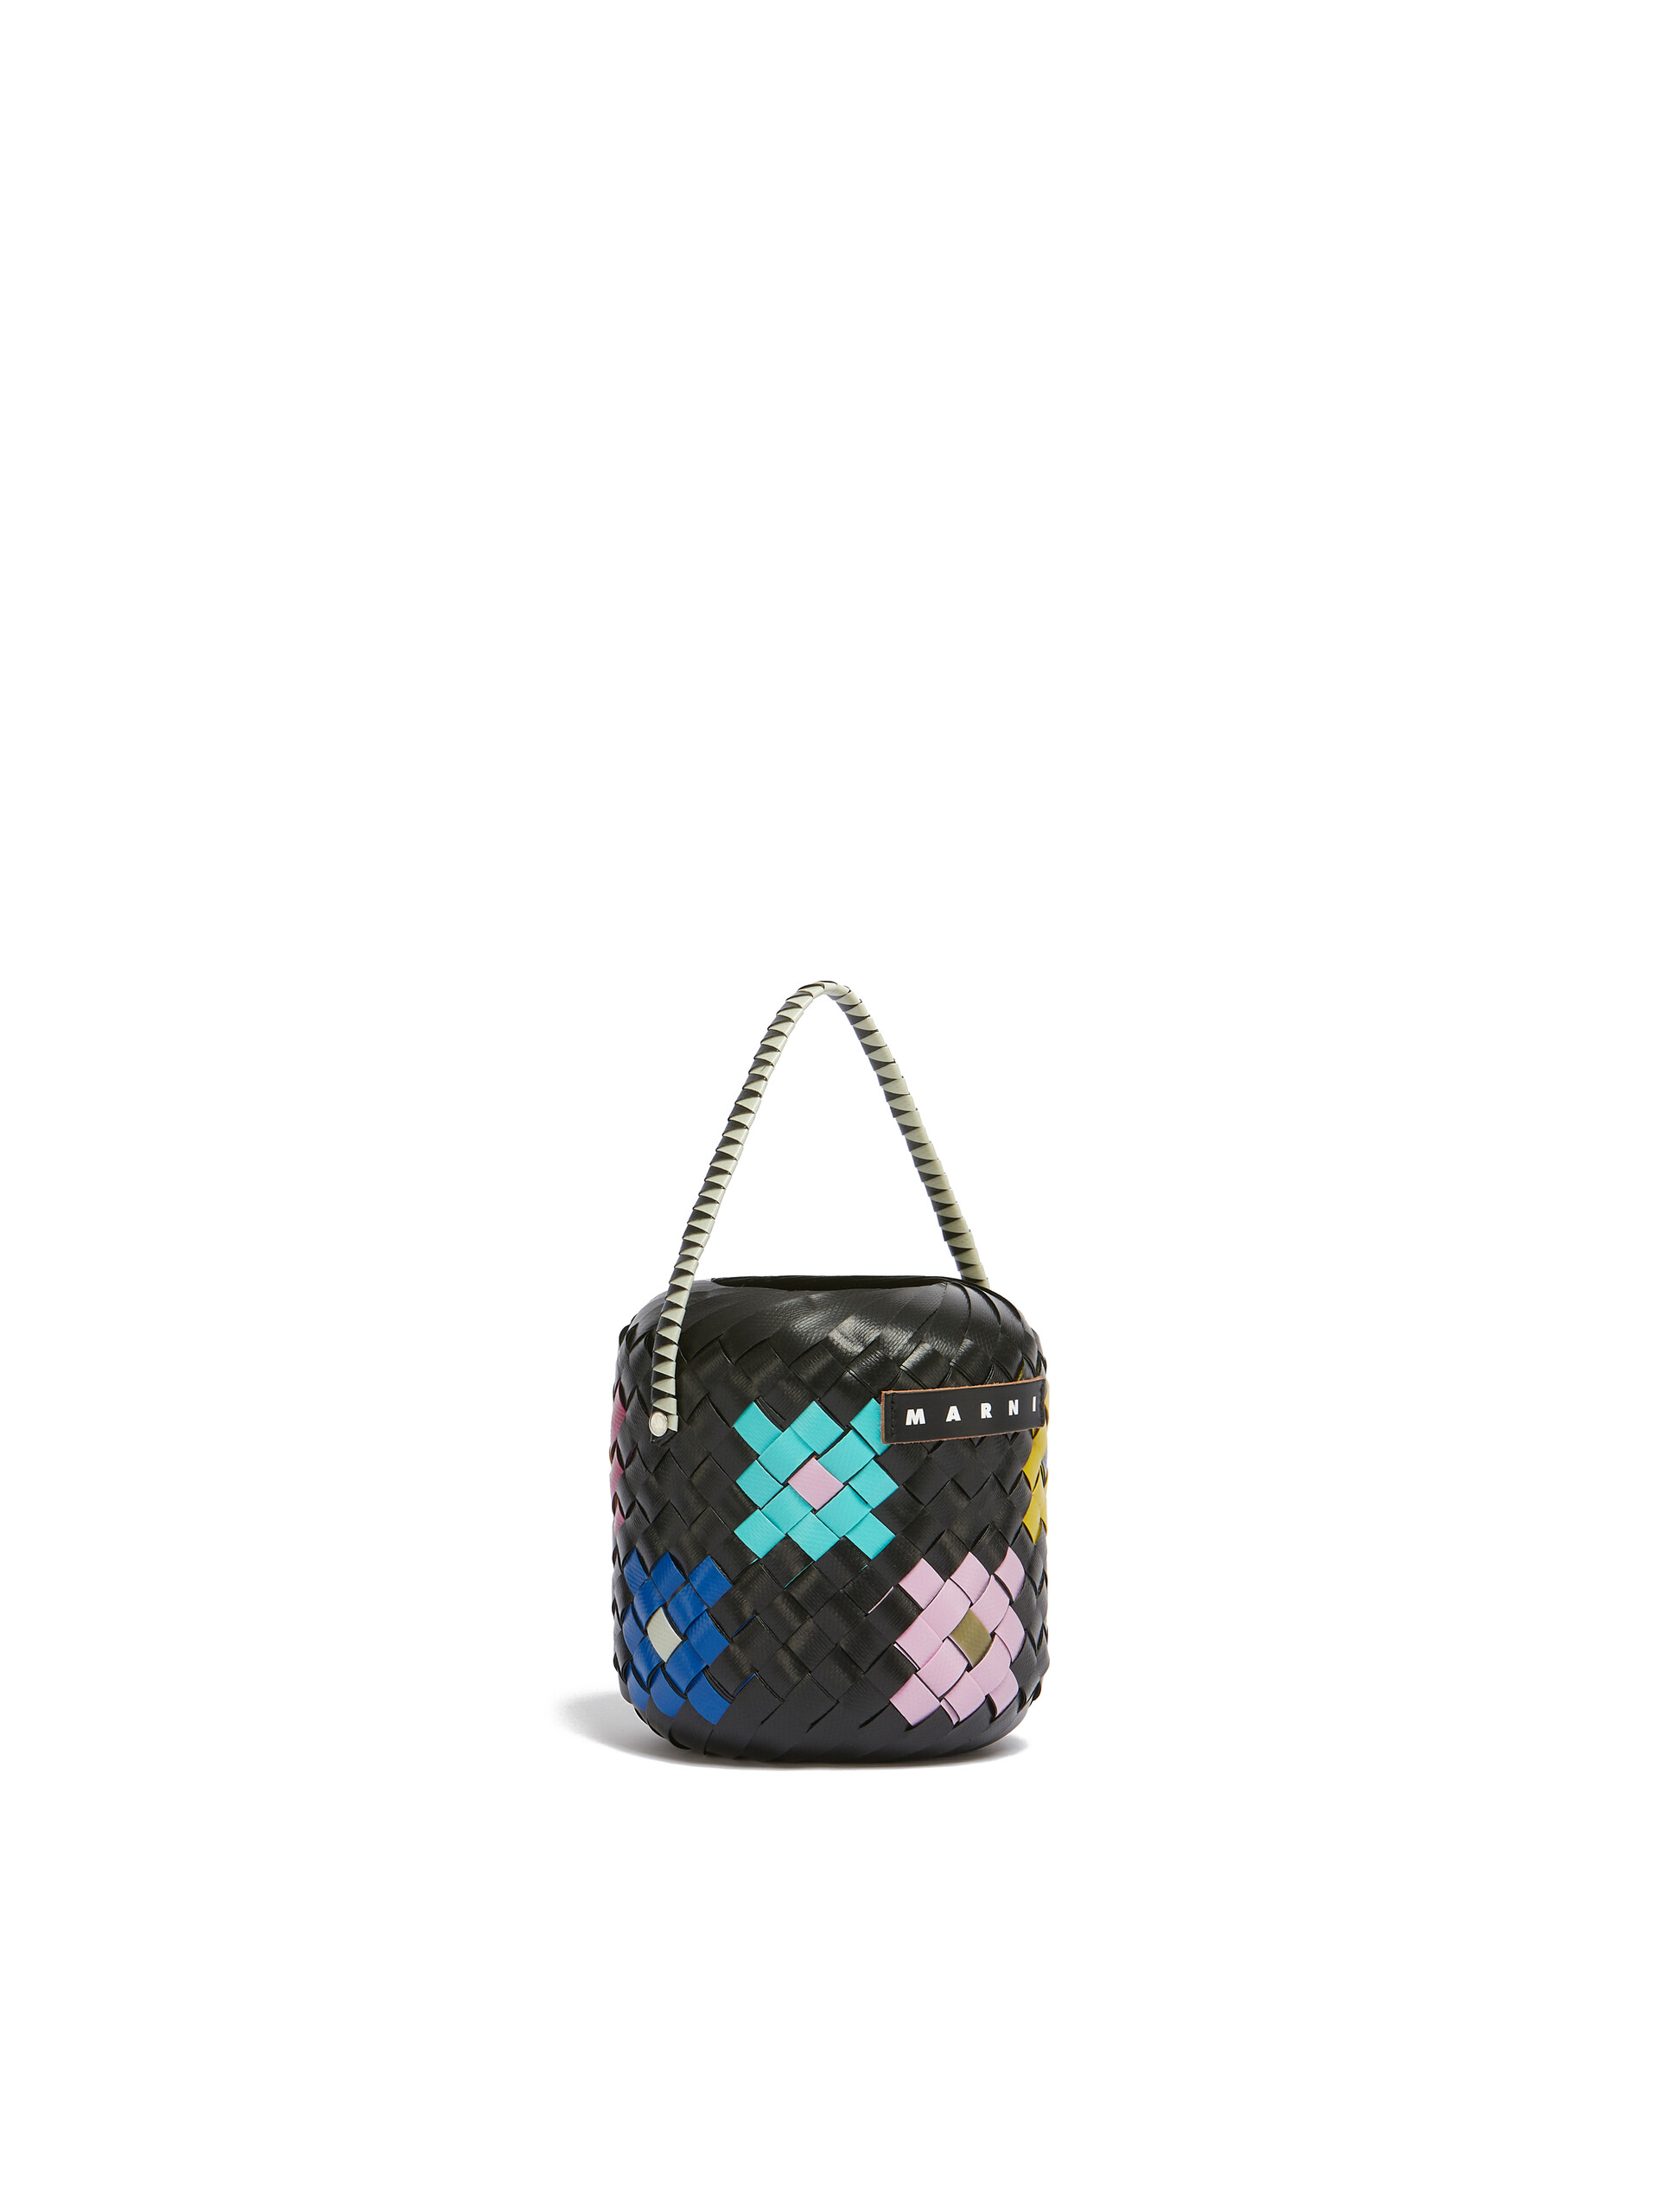 Sac MARNI MARKET BUCKET noir avec fleurs - Sacs cabas - Image 2